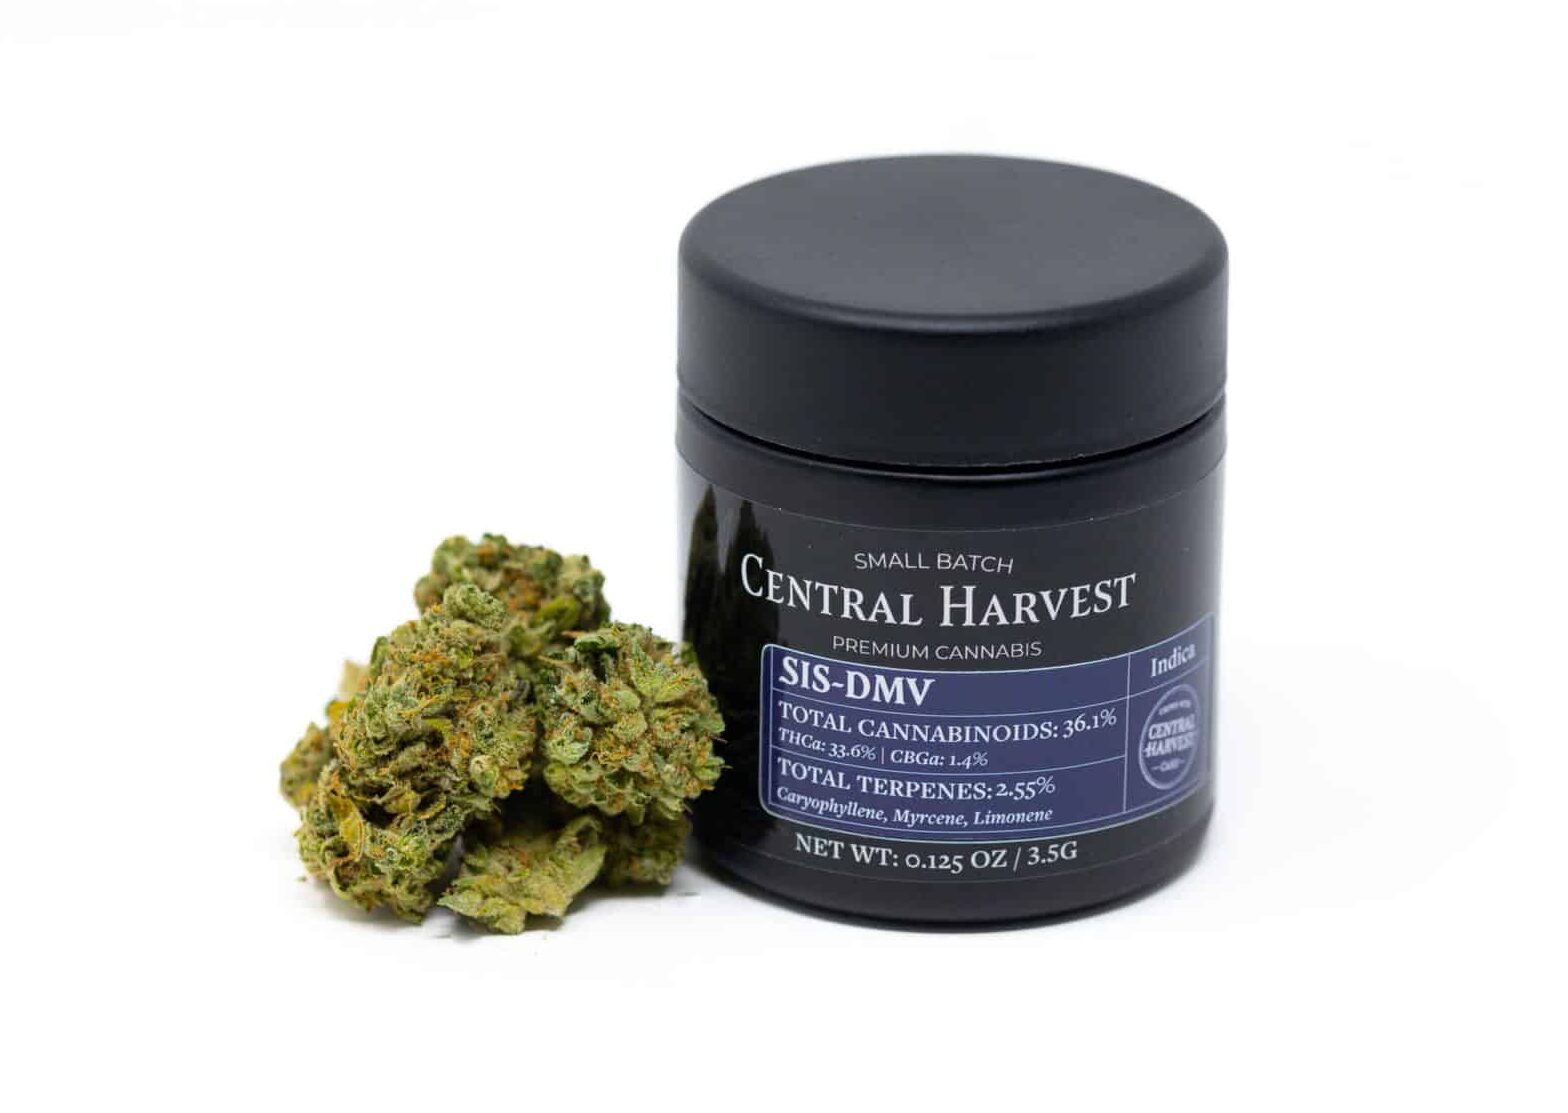 SIS-DMV an Indica Cannabis strain grown by Central Harvest